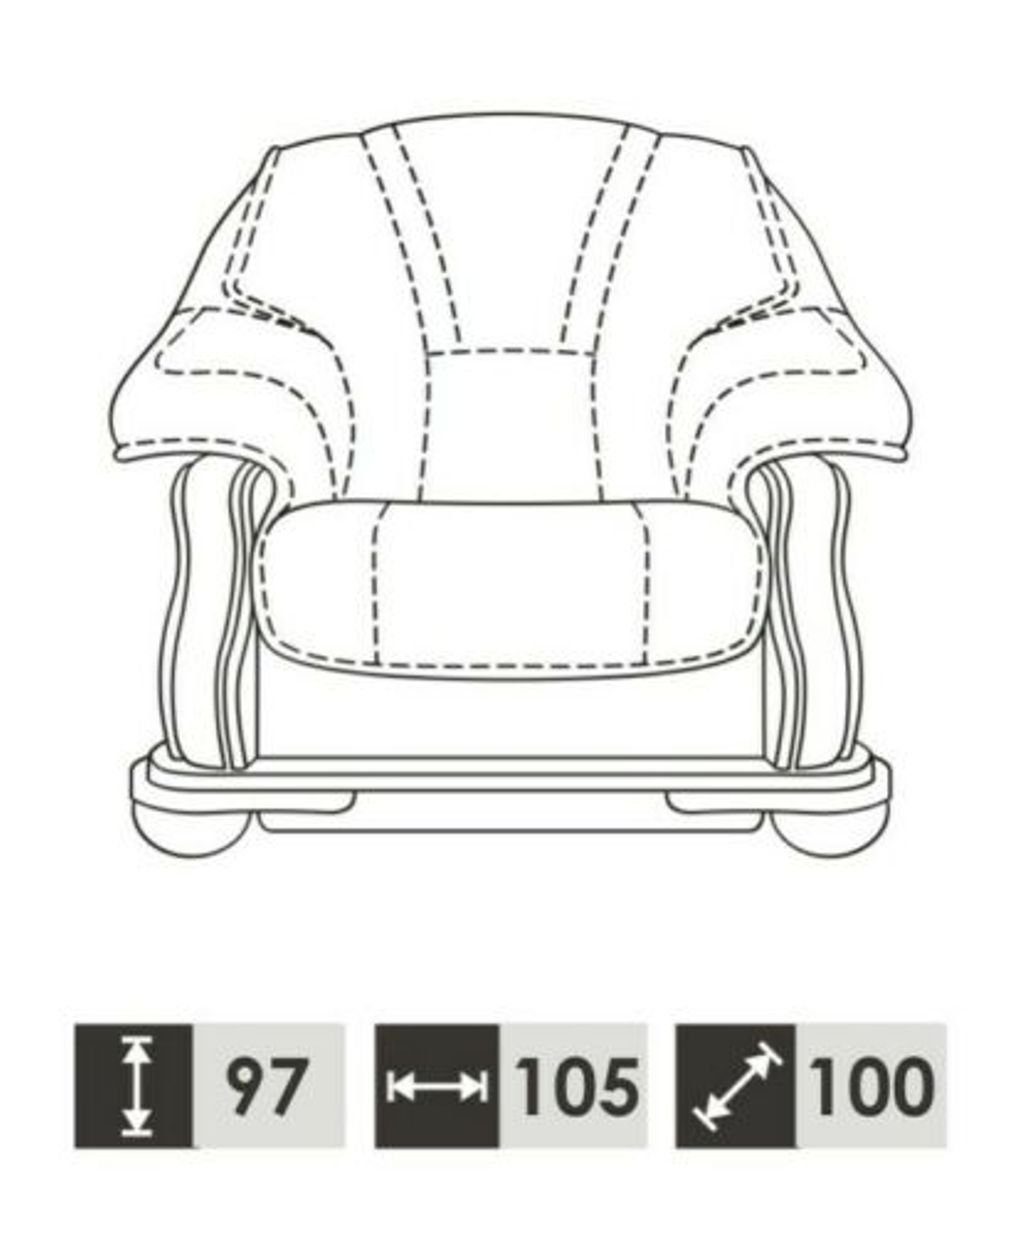 JVmoebel Sofa Antik Stil Ledersofa Europe 3+2+1 Made in Couch Sofagarnitur Ledermöbel